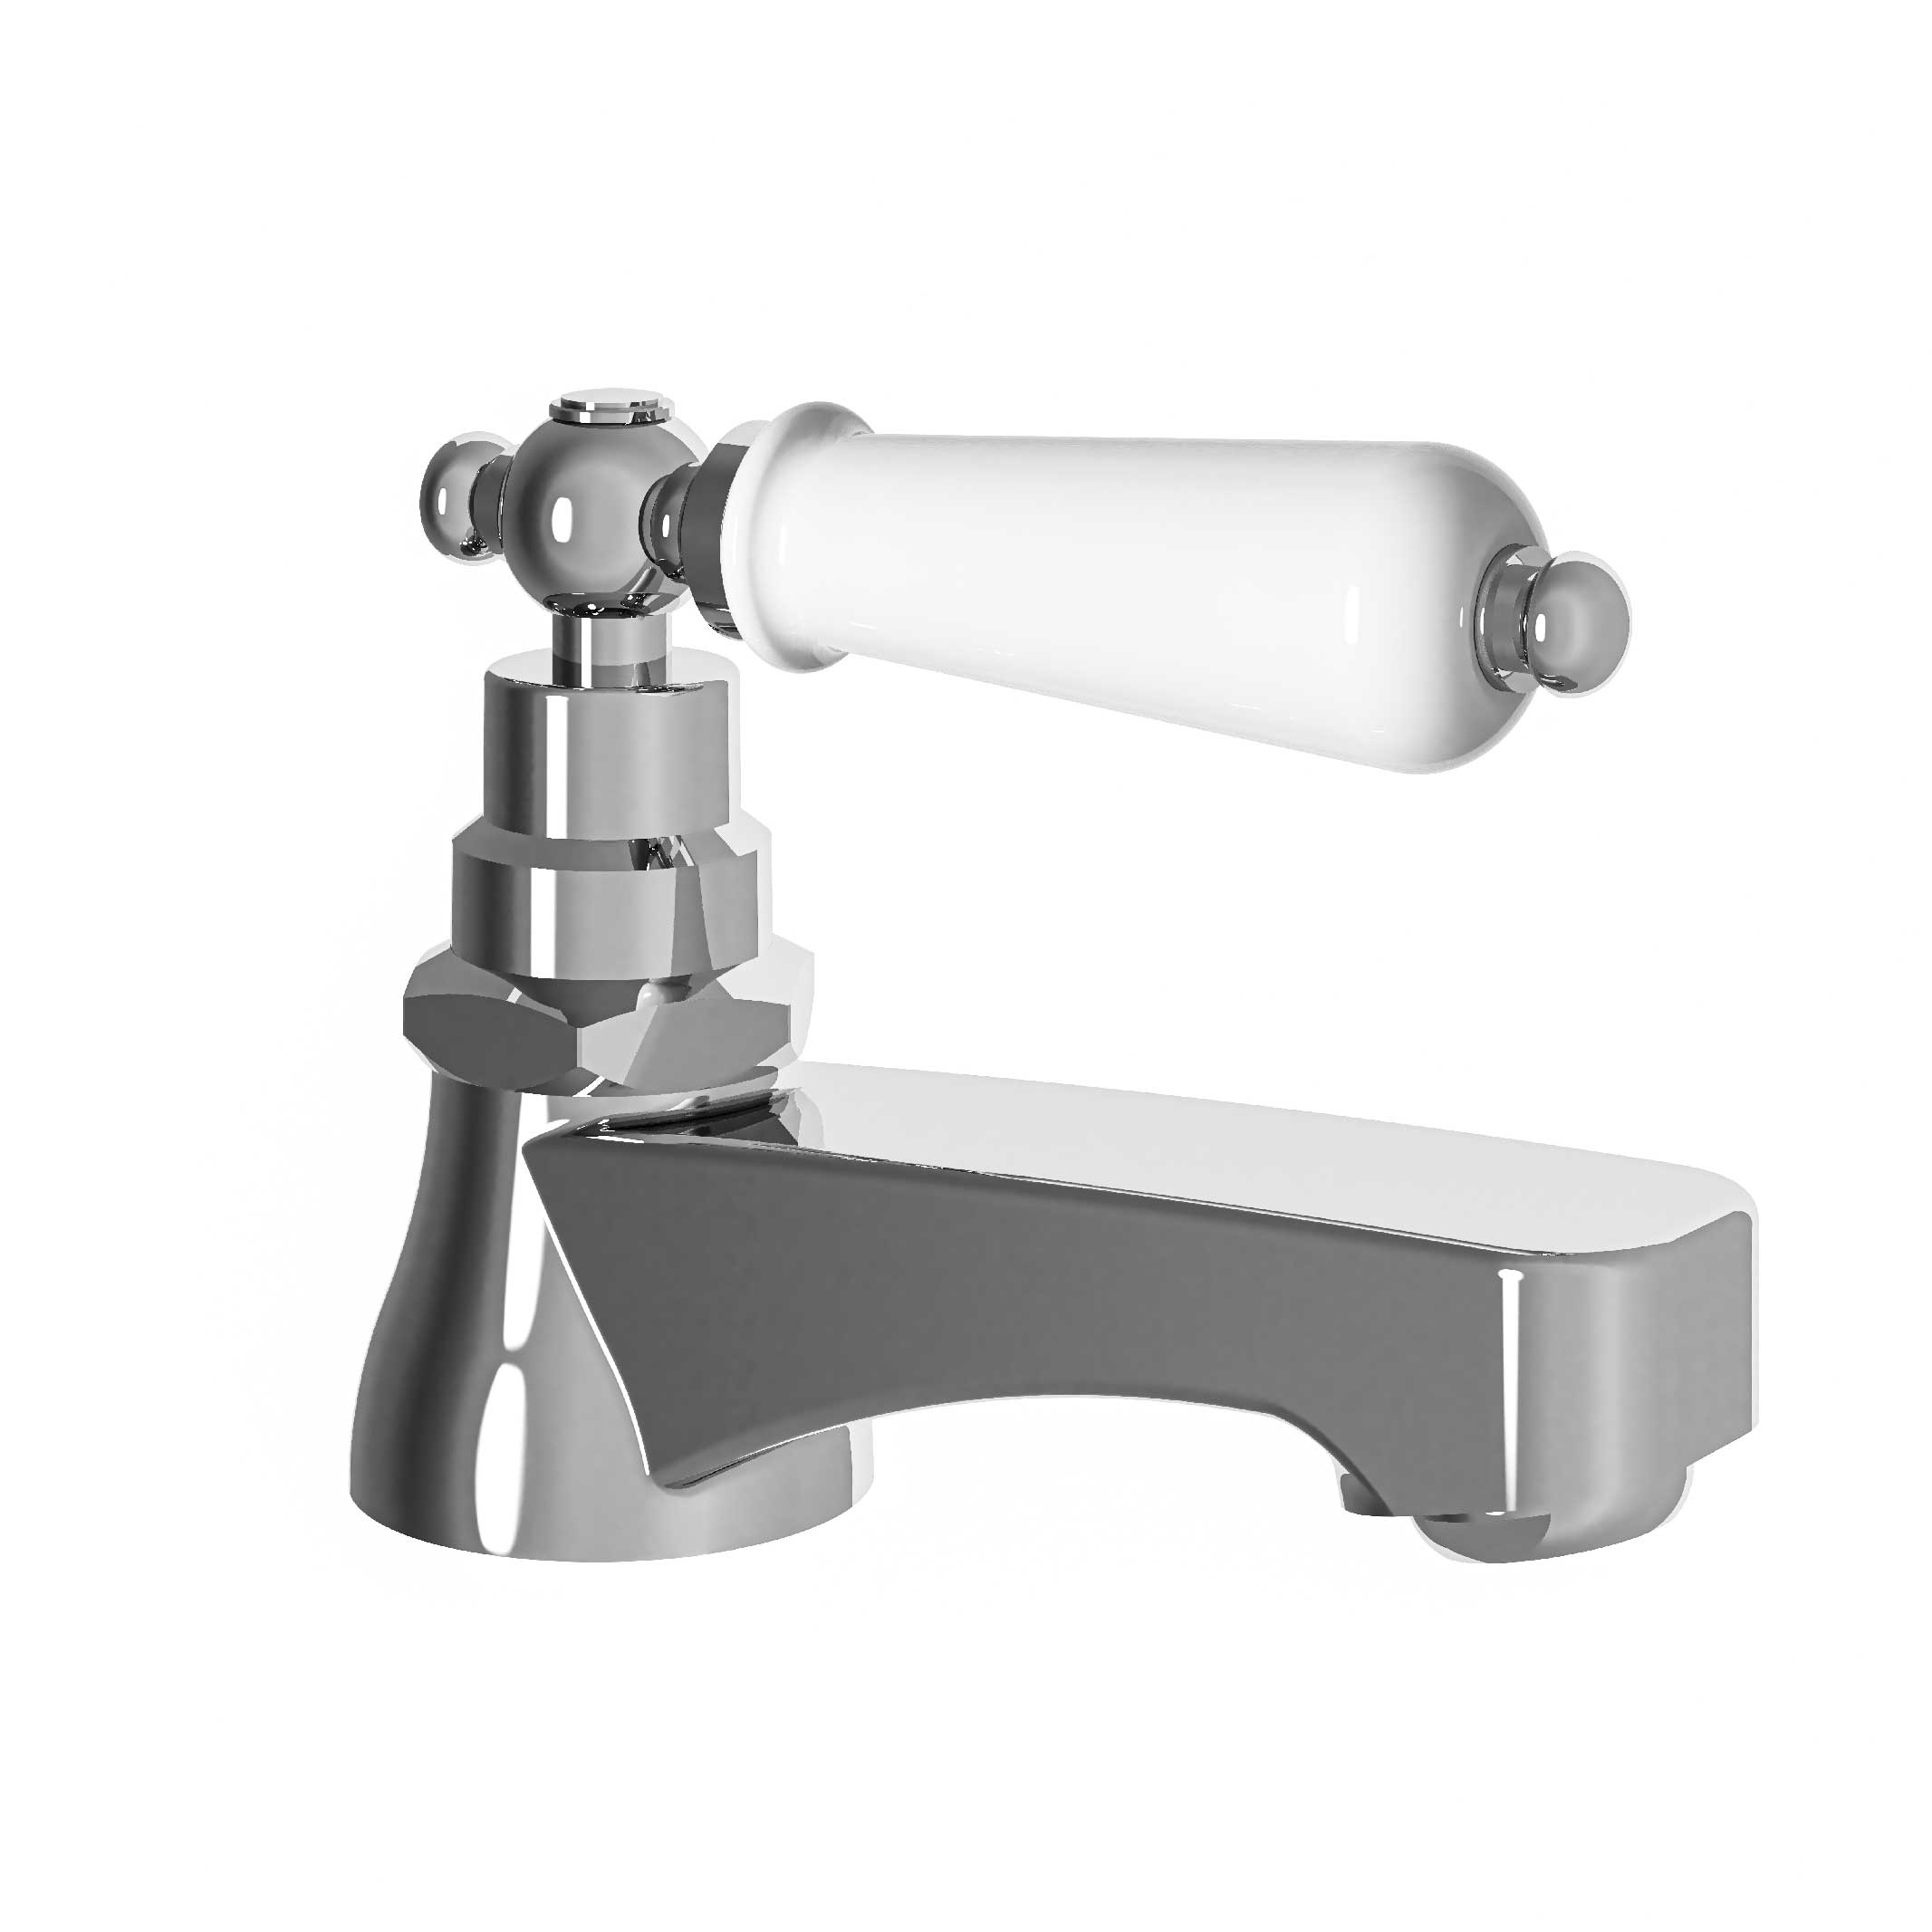 M32-4S1 Rim mounted wash-hand basin tap